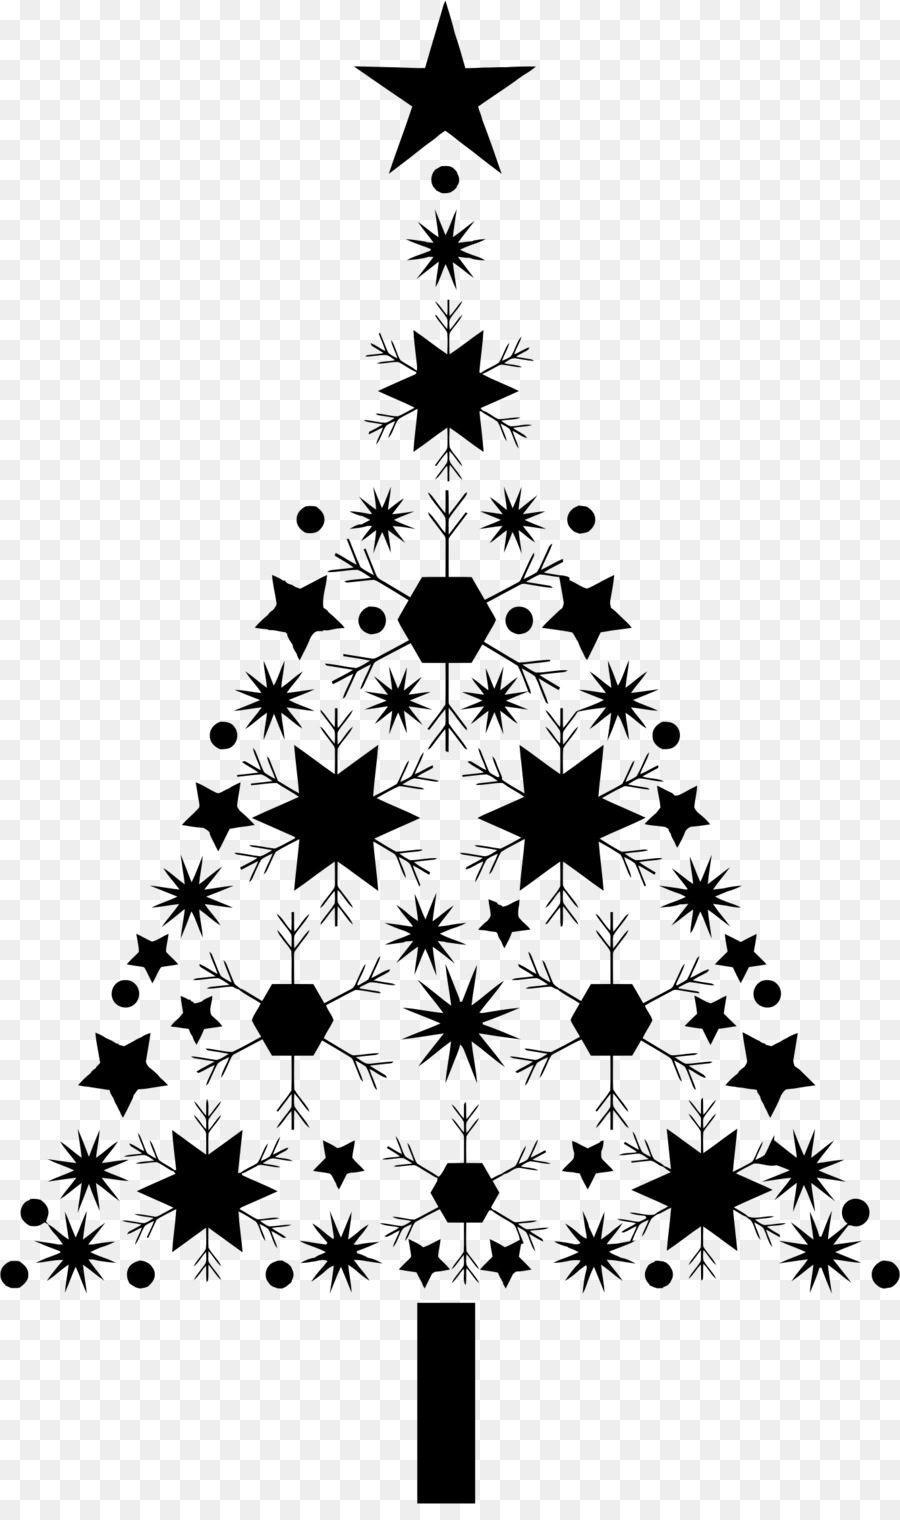 Clipart snowflake tree. Christmas black and white